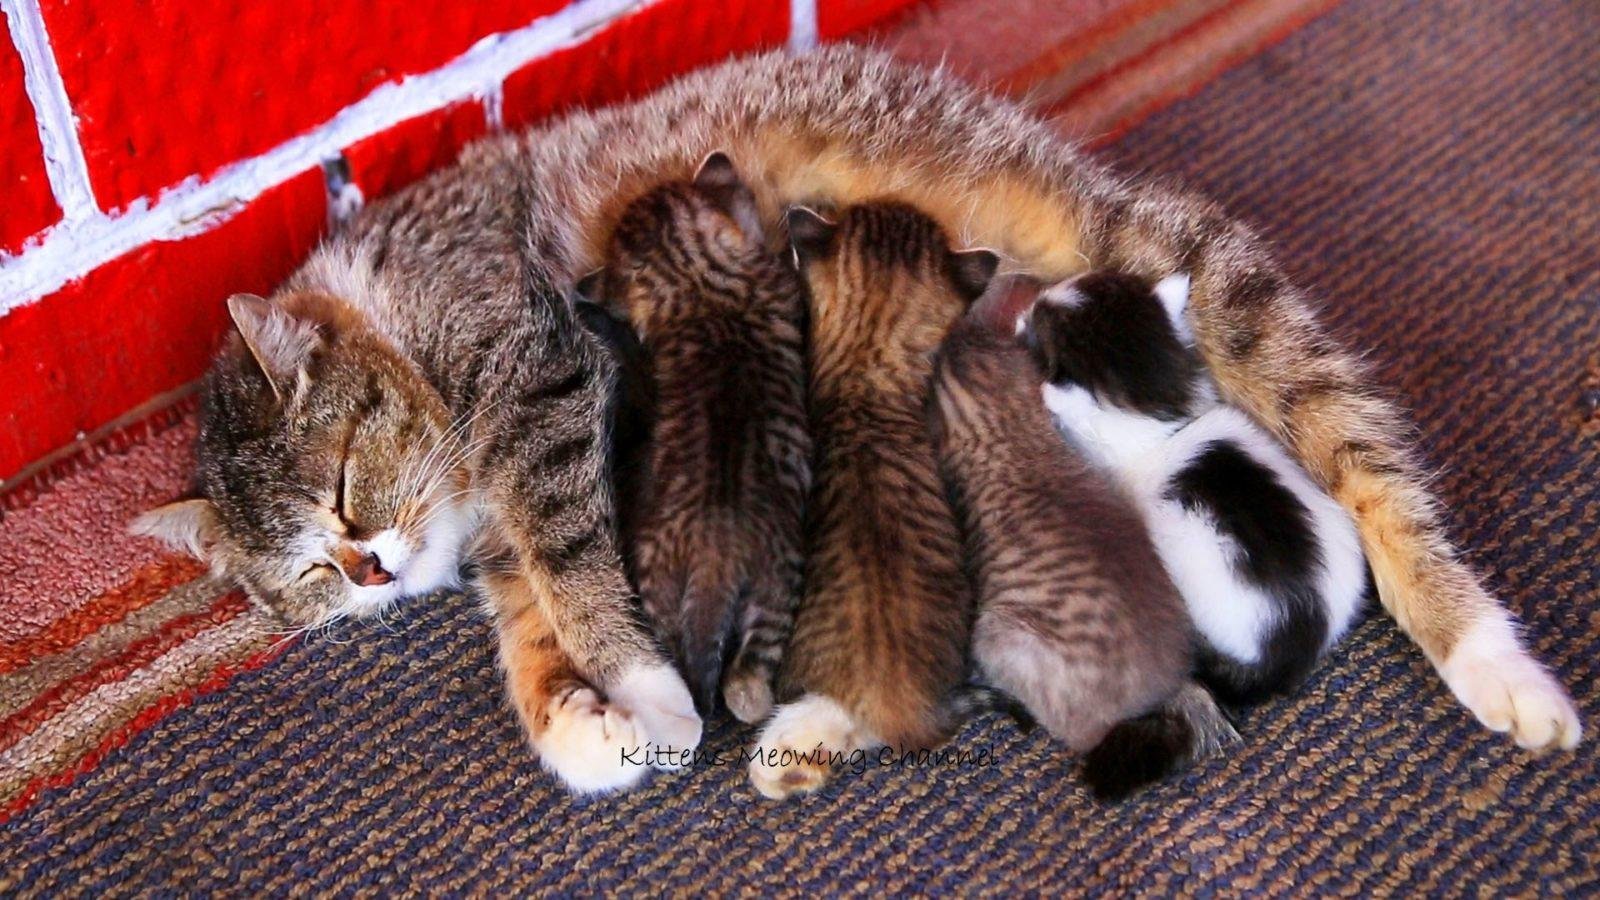 Котята звуко. Кошка с котятами. Забота кошки о котятах. Кошка заботится о потомстве. Кошка ухаживает за котятами.